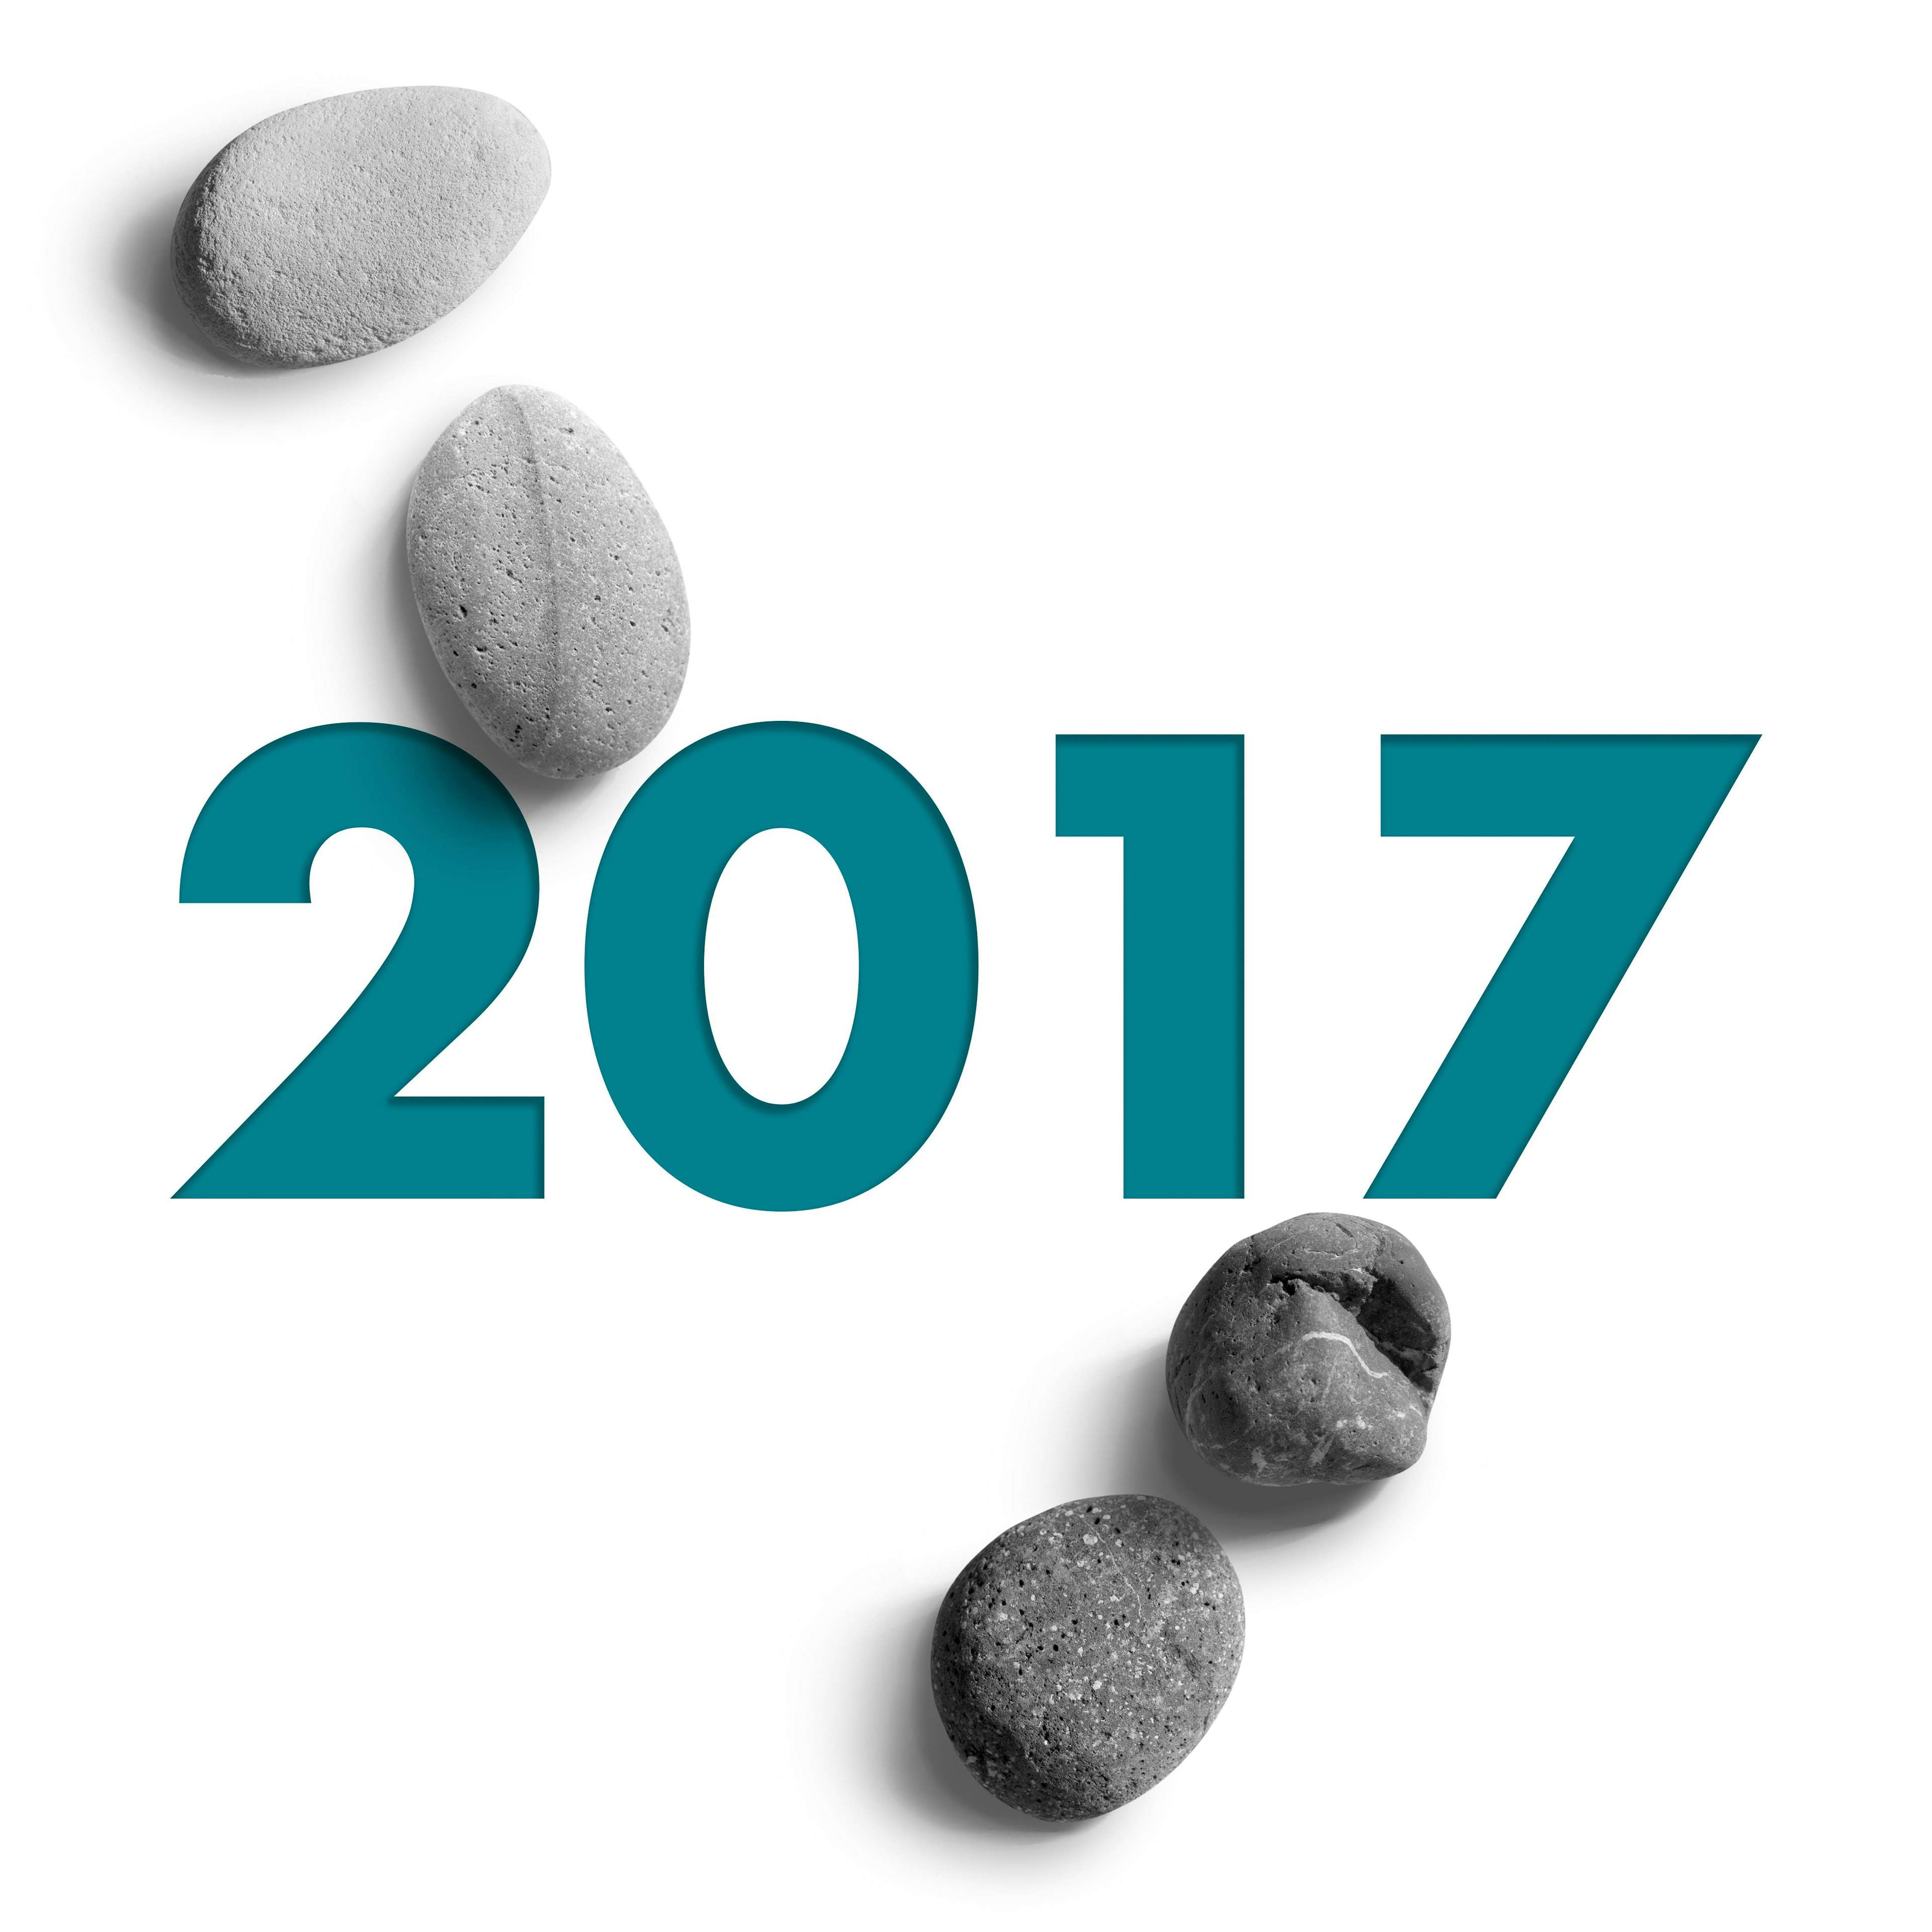 Year 2017